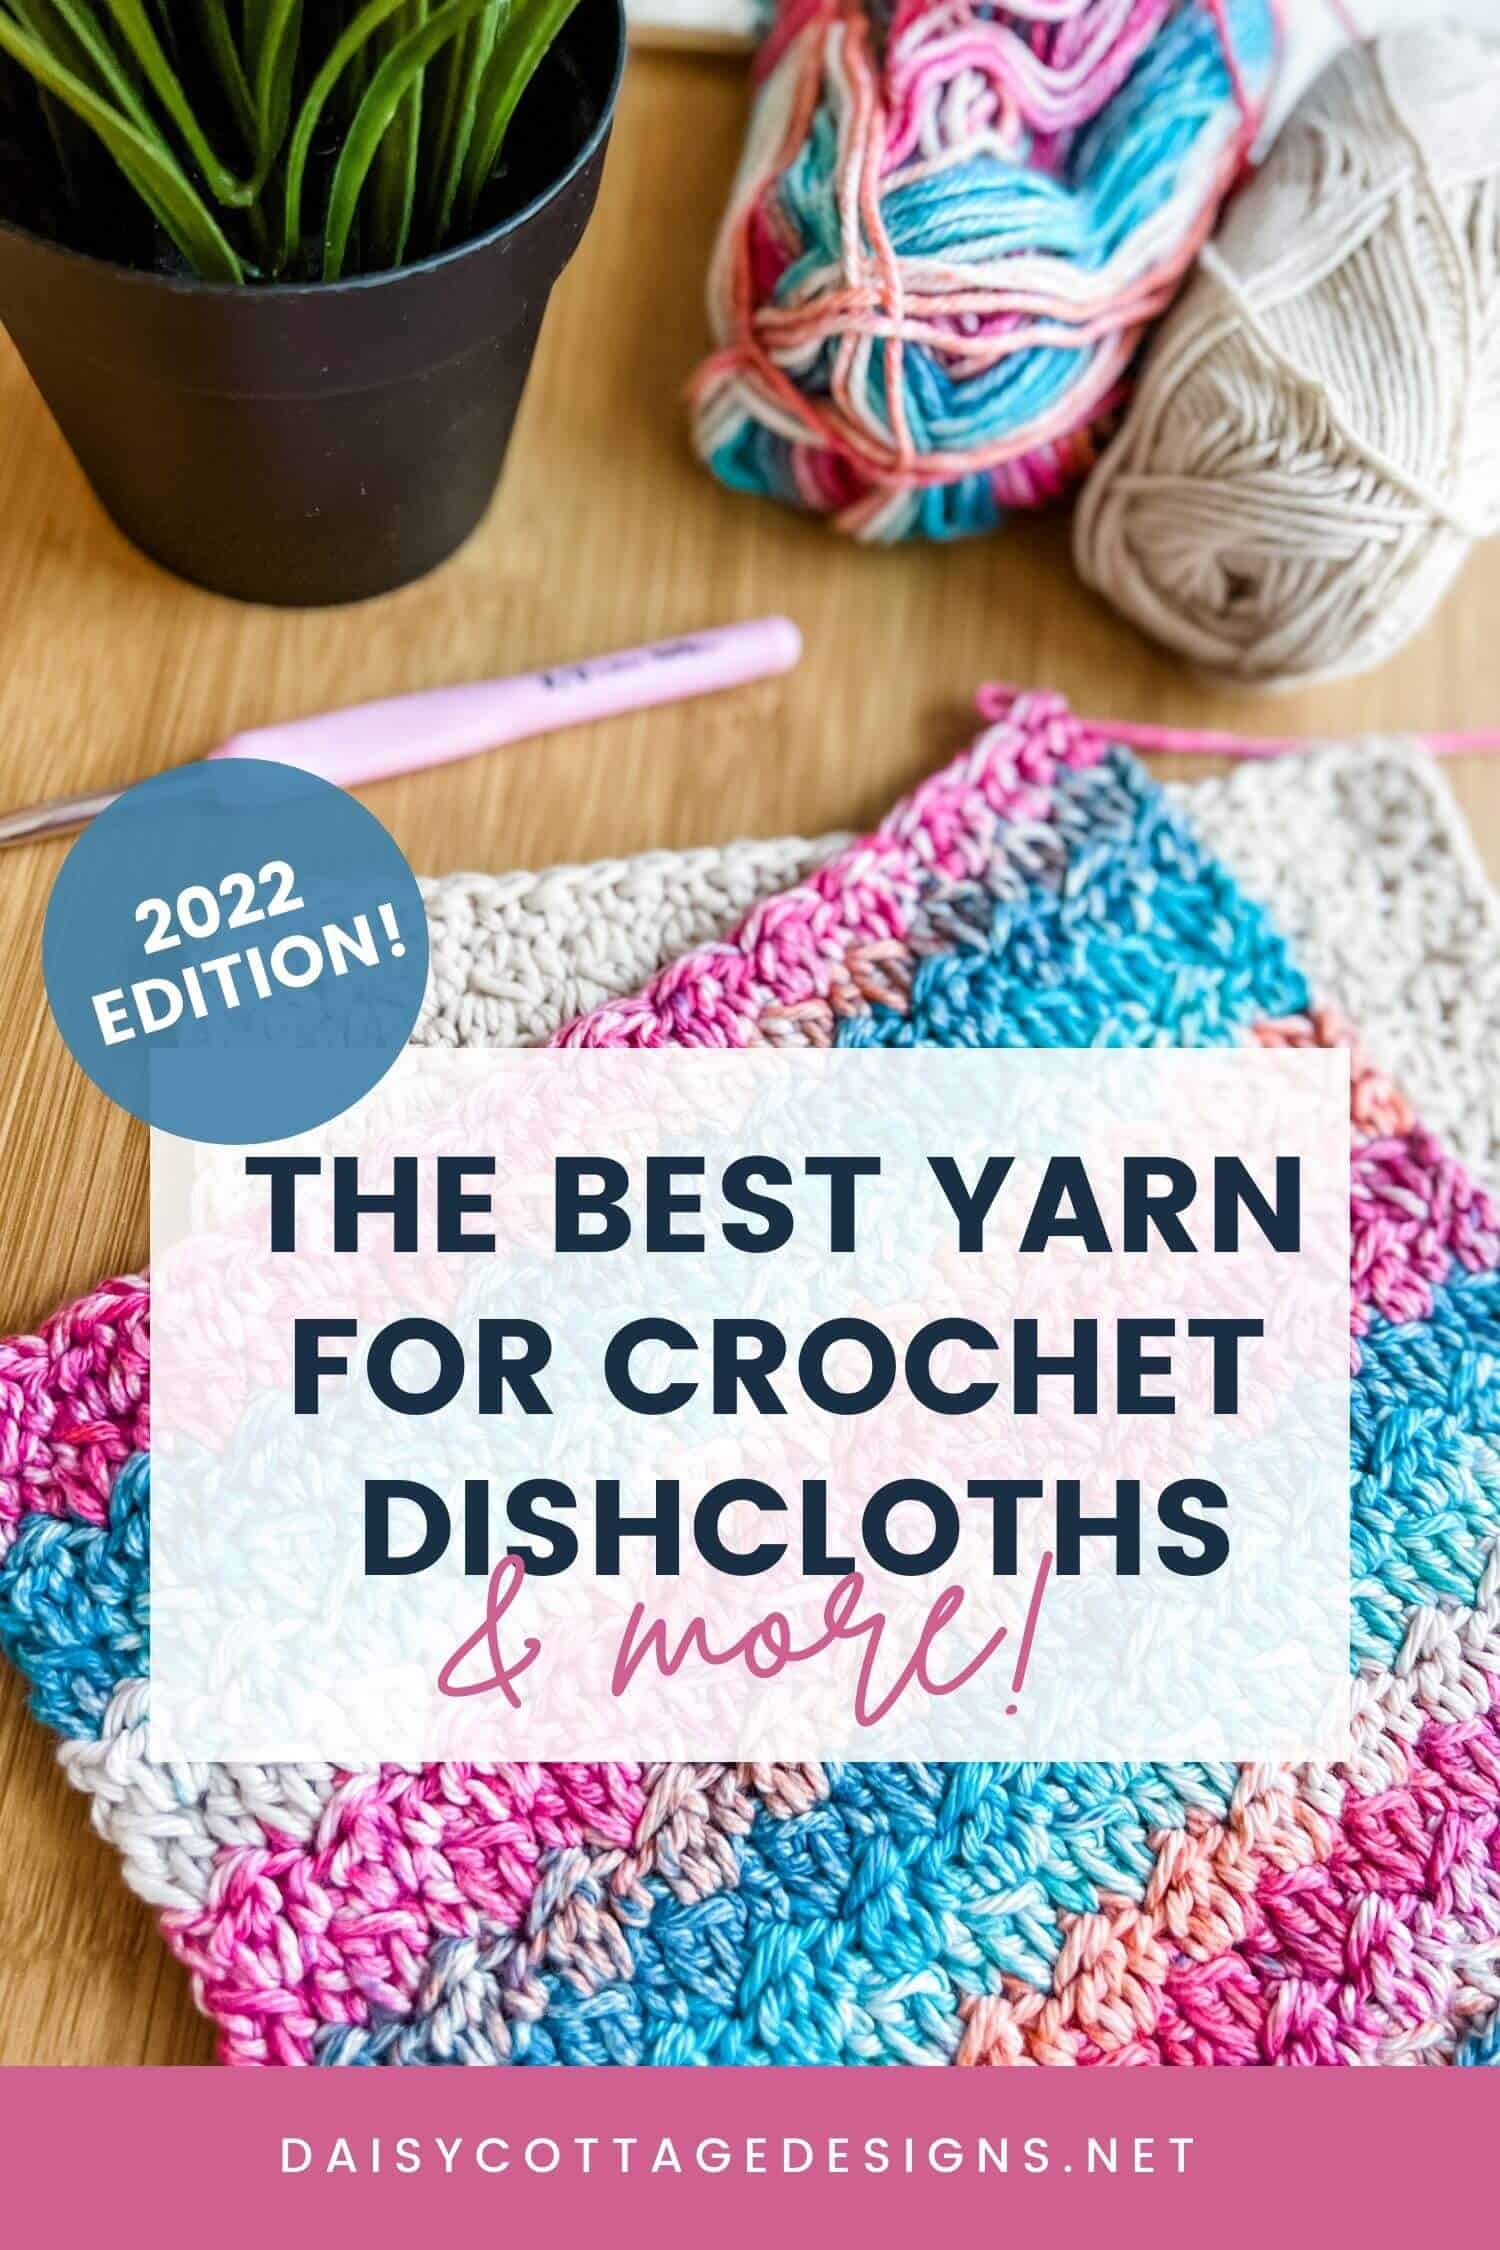 The best yarn for crochet dishcloths